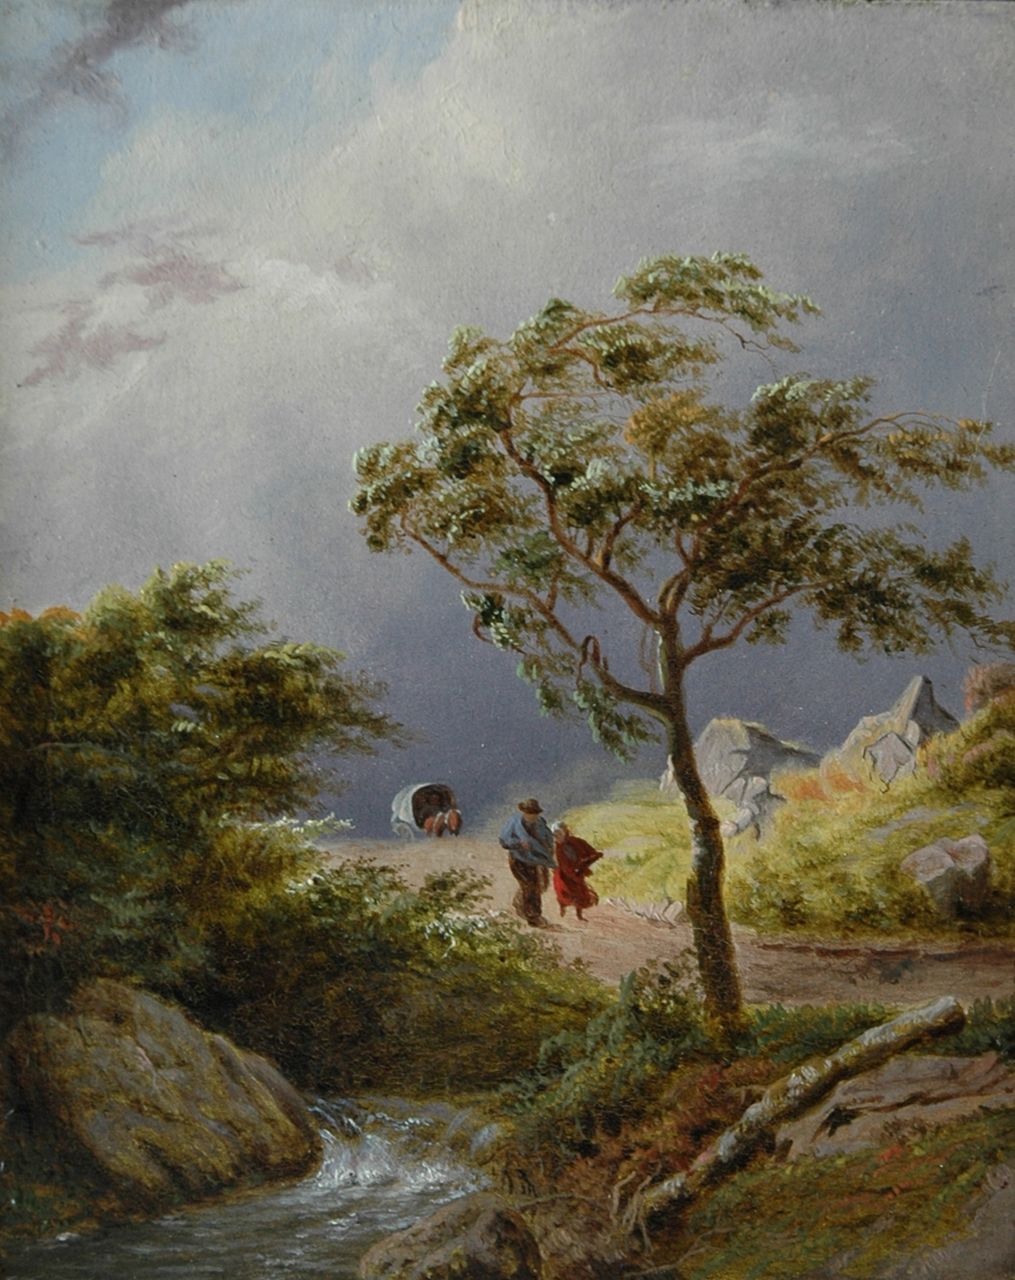 Klombeck J.B.  | Johann Bernard Klombeck, Landvolk op een zandweg bij opkomende storm, olieverf op paneel 15,6 x 12,6 cm